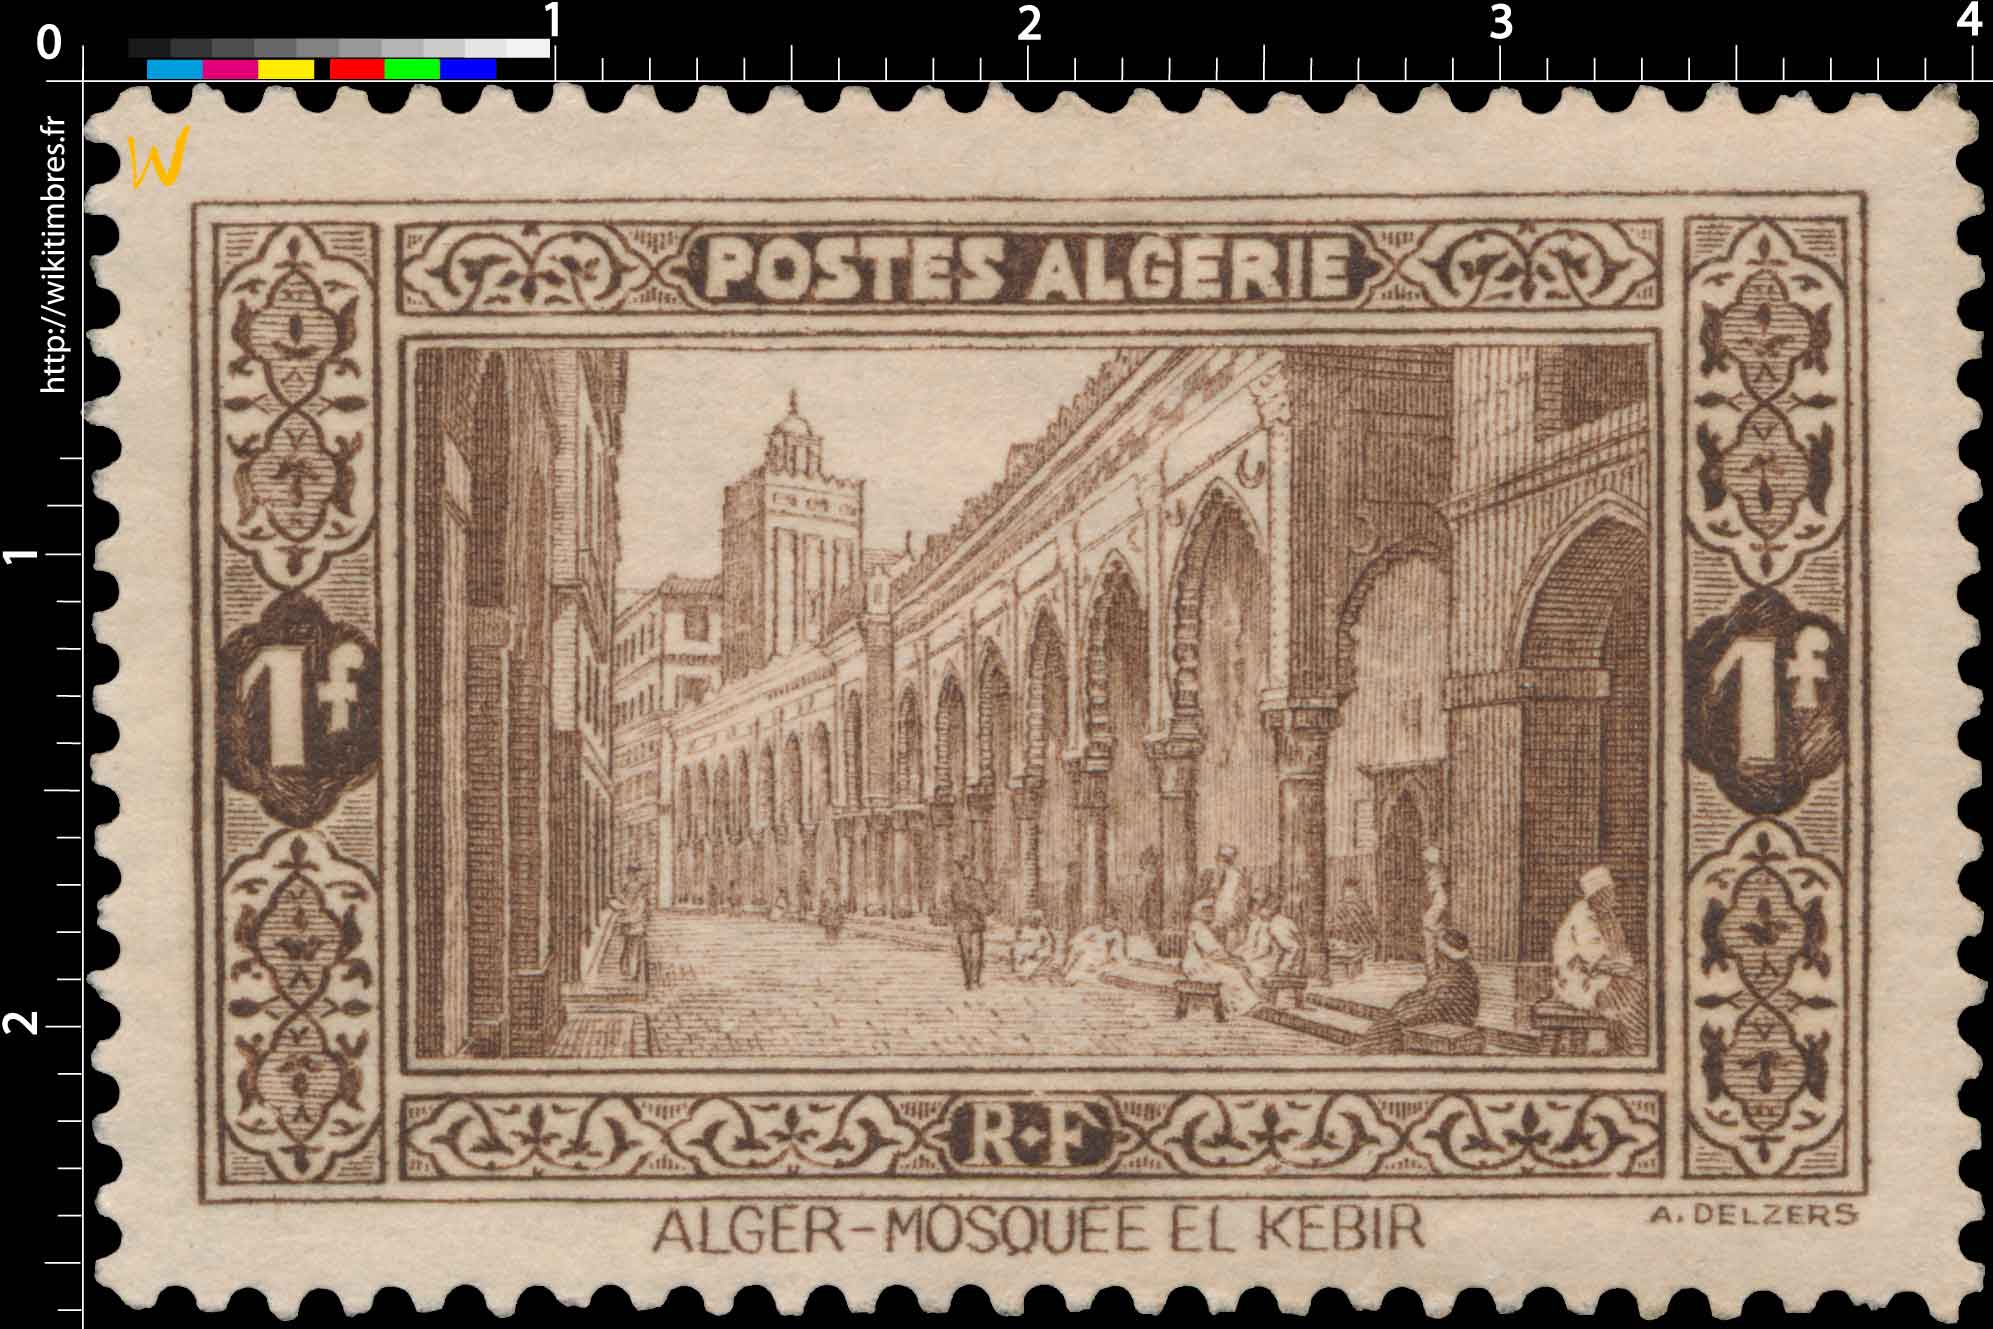 Algérie - Mosquée El Kébir